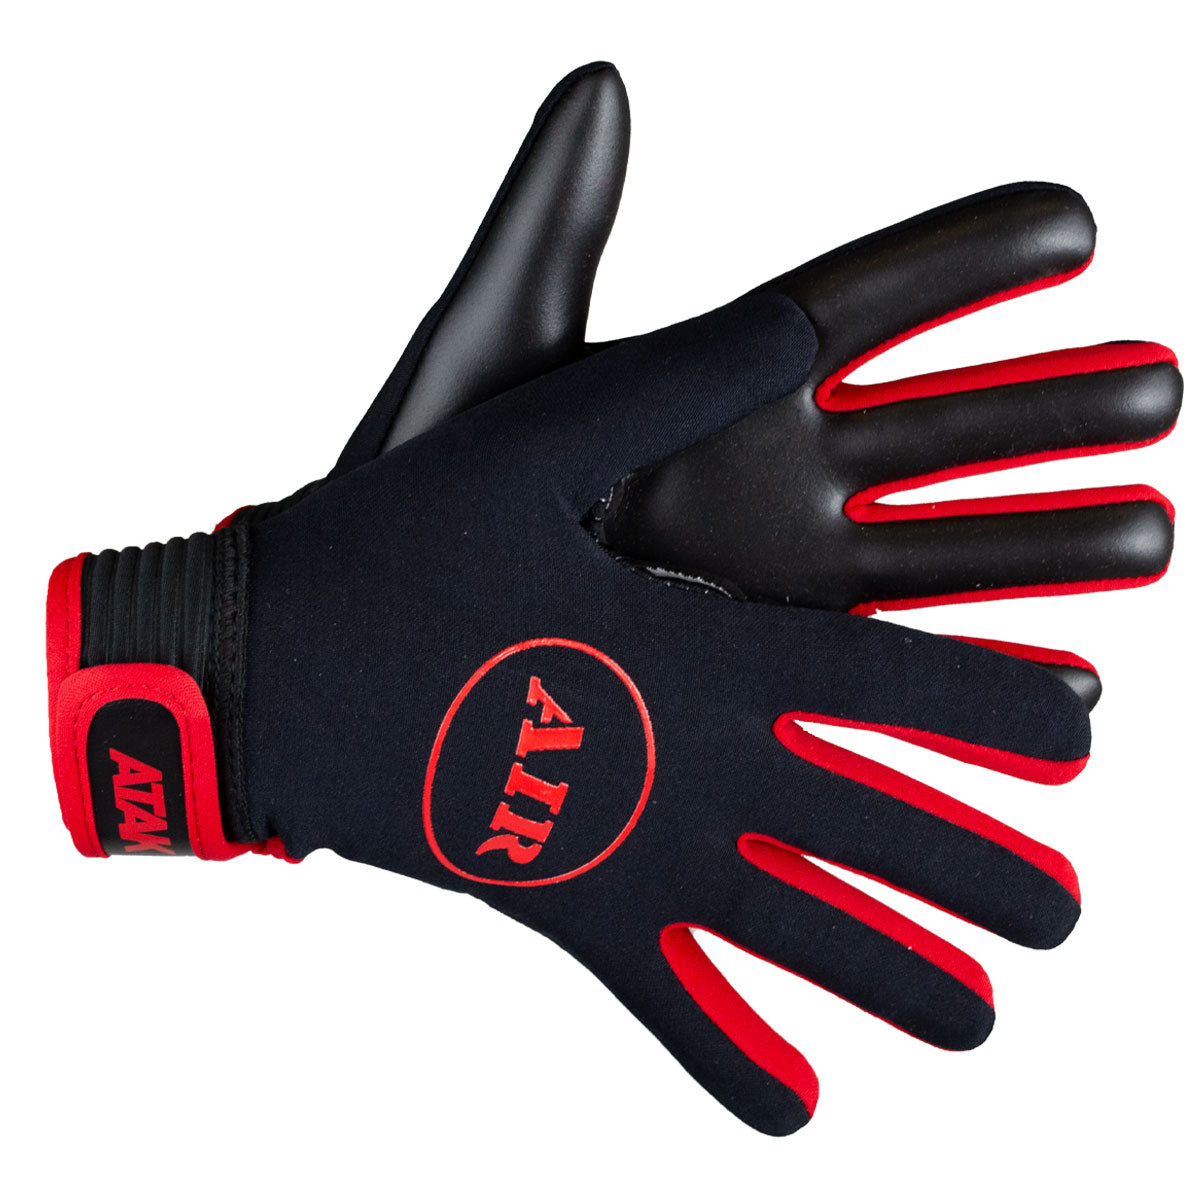 Atak Air Gaelic Gloves - Adult - Red